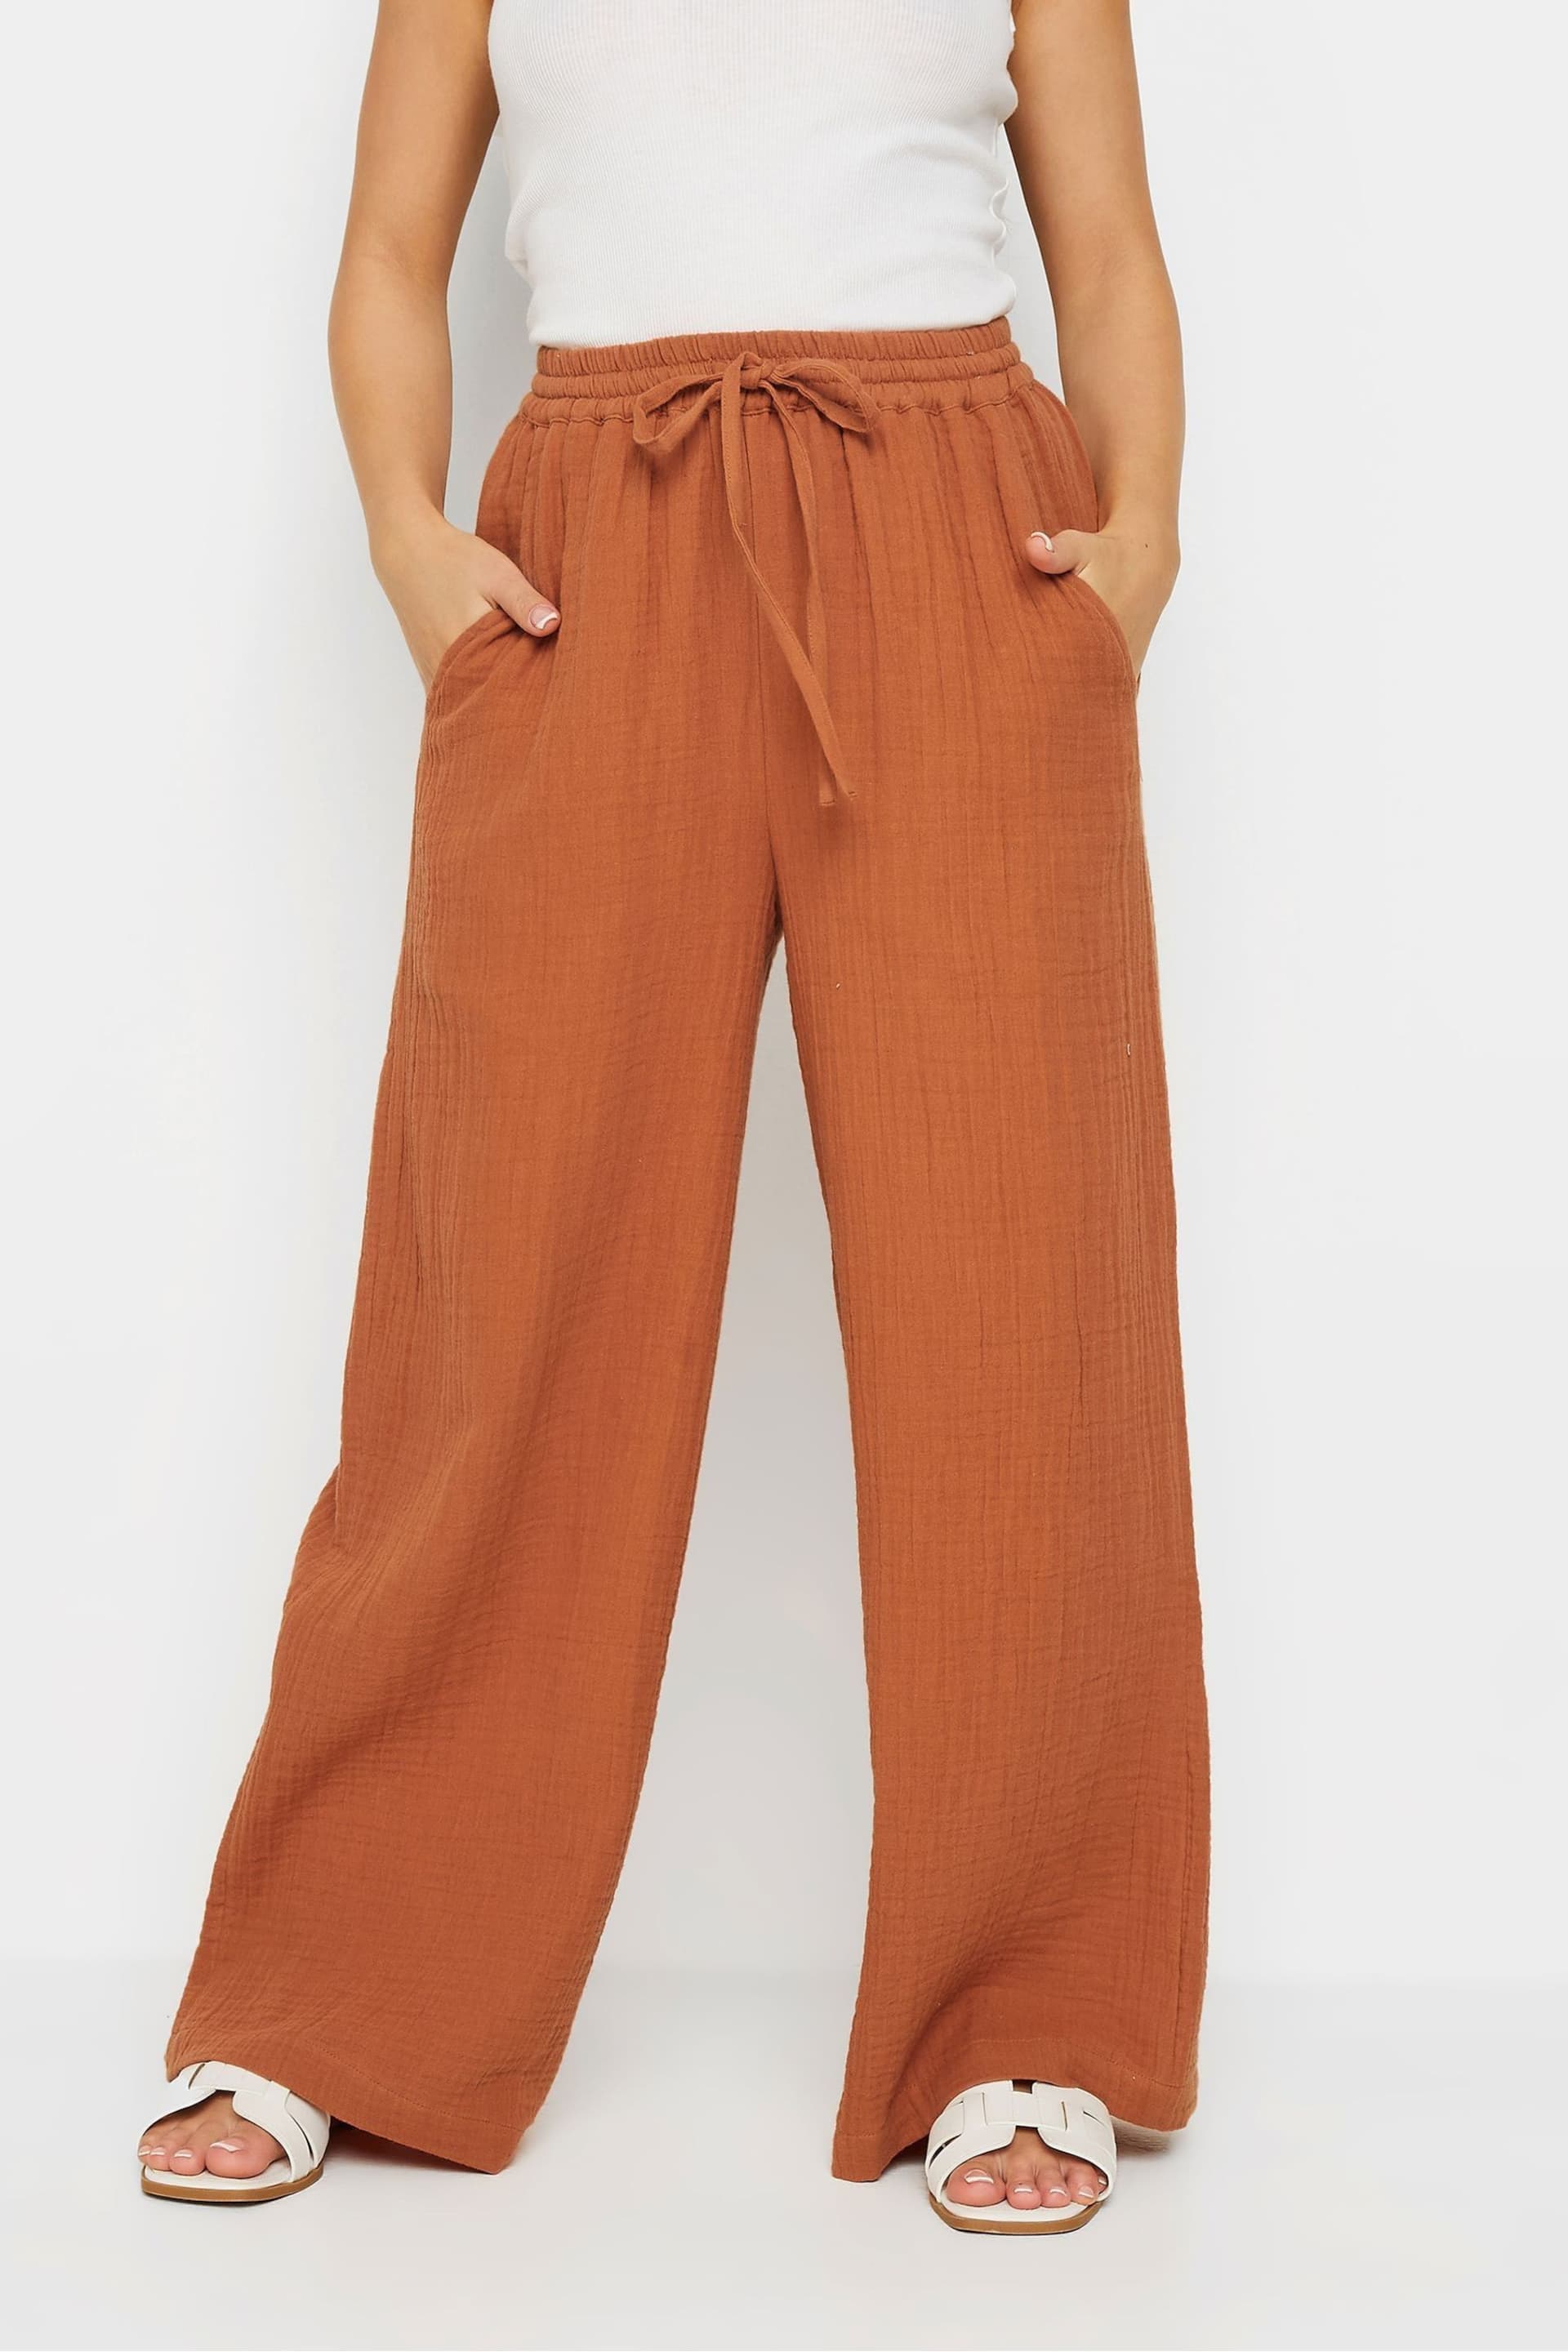 PixieGirl Petite Orange Bonded Tie Waist Trousers - Image 2 of 5